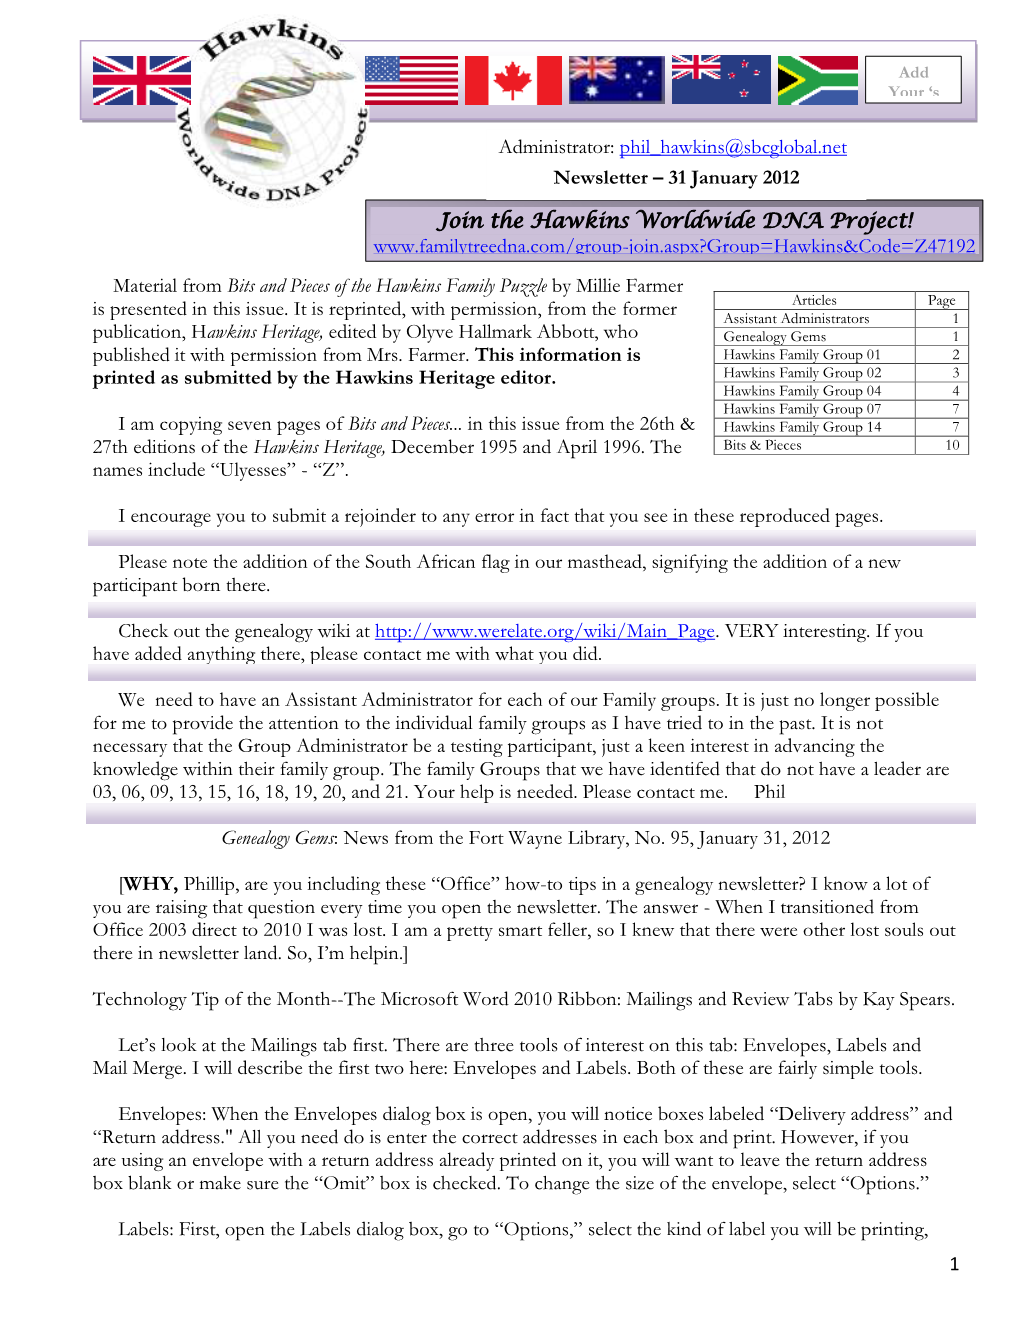 DNA Newletter, 31 January 2012